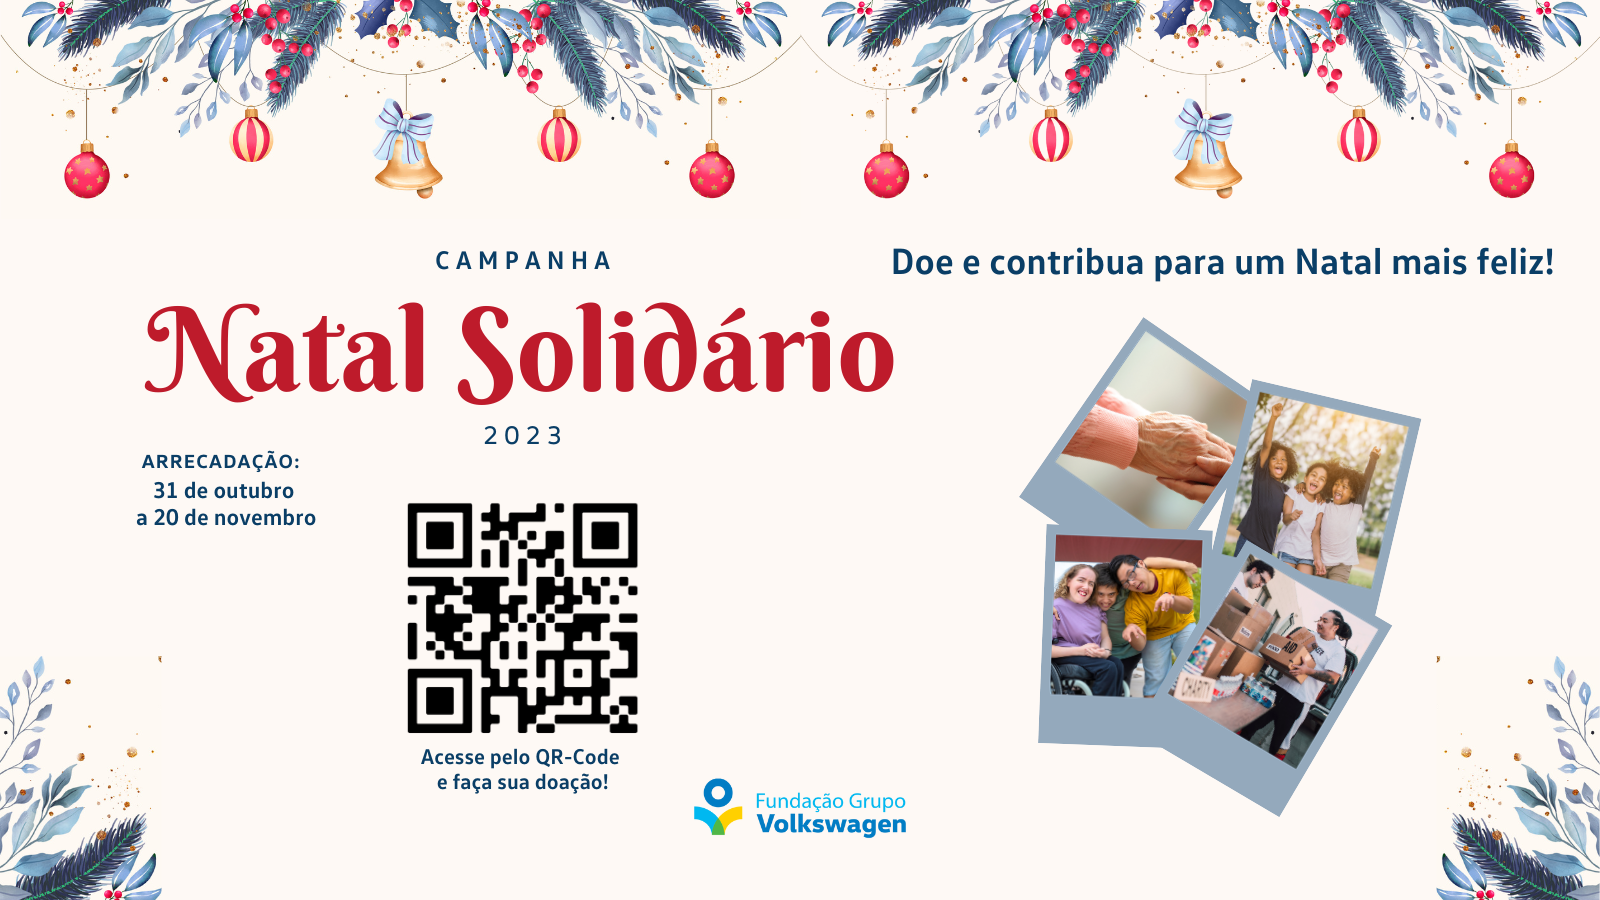 Campanha Natal Solid Rio Funda O Grupo Volkswagen Doare